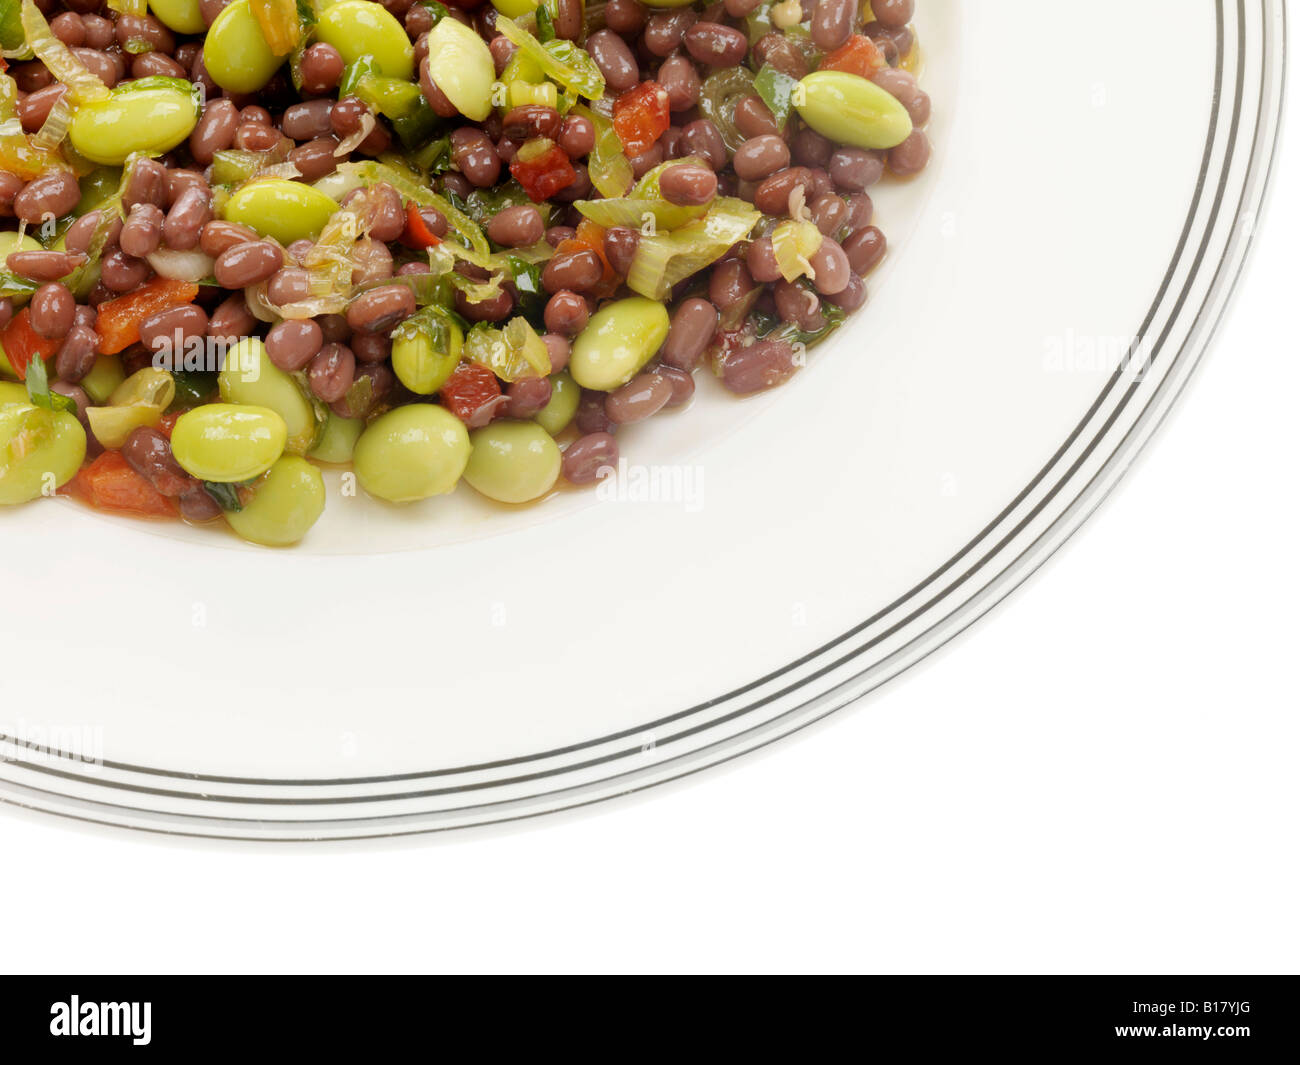 Adzuki and Edamame Bean Salad Stock Photo